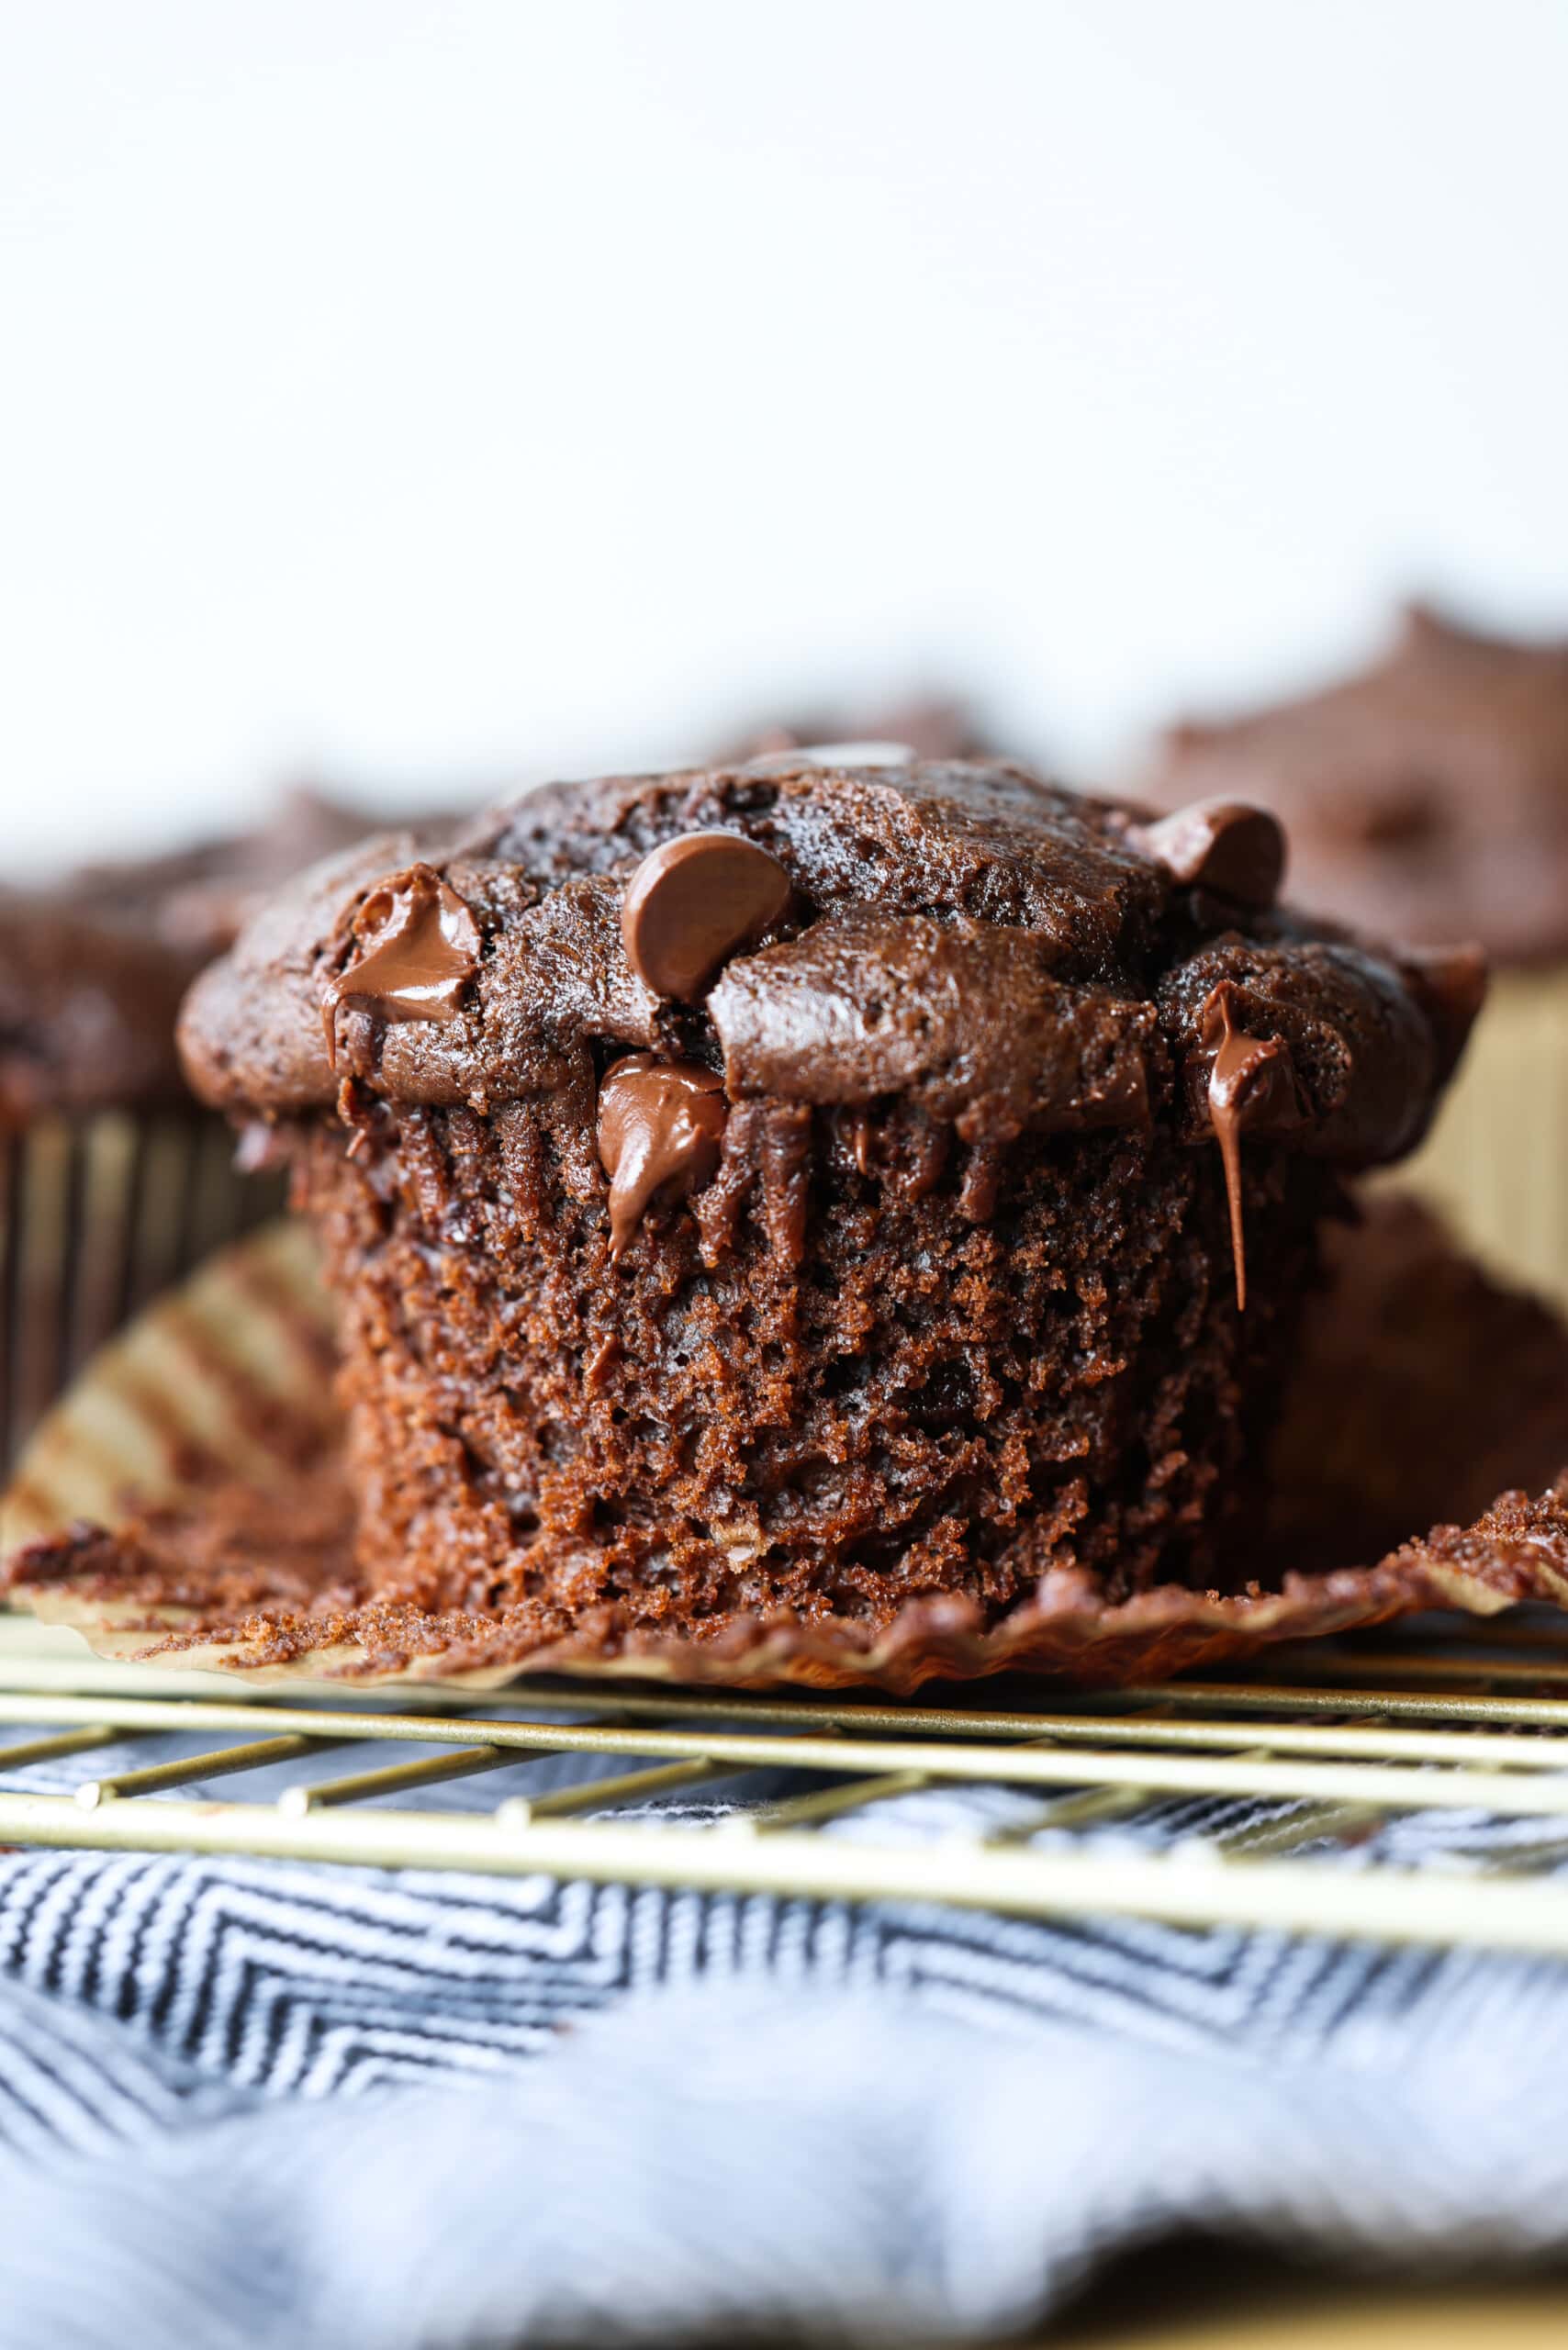 Schokoladen-Muffin ausgepackt mit geschmolzenen Schokoladenstückchen